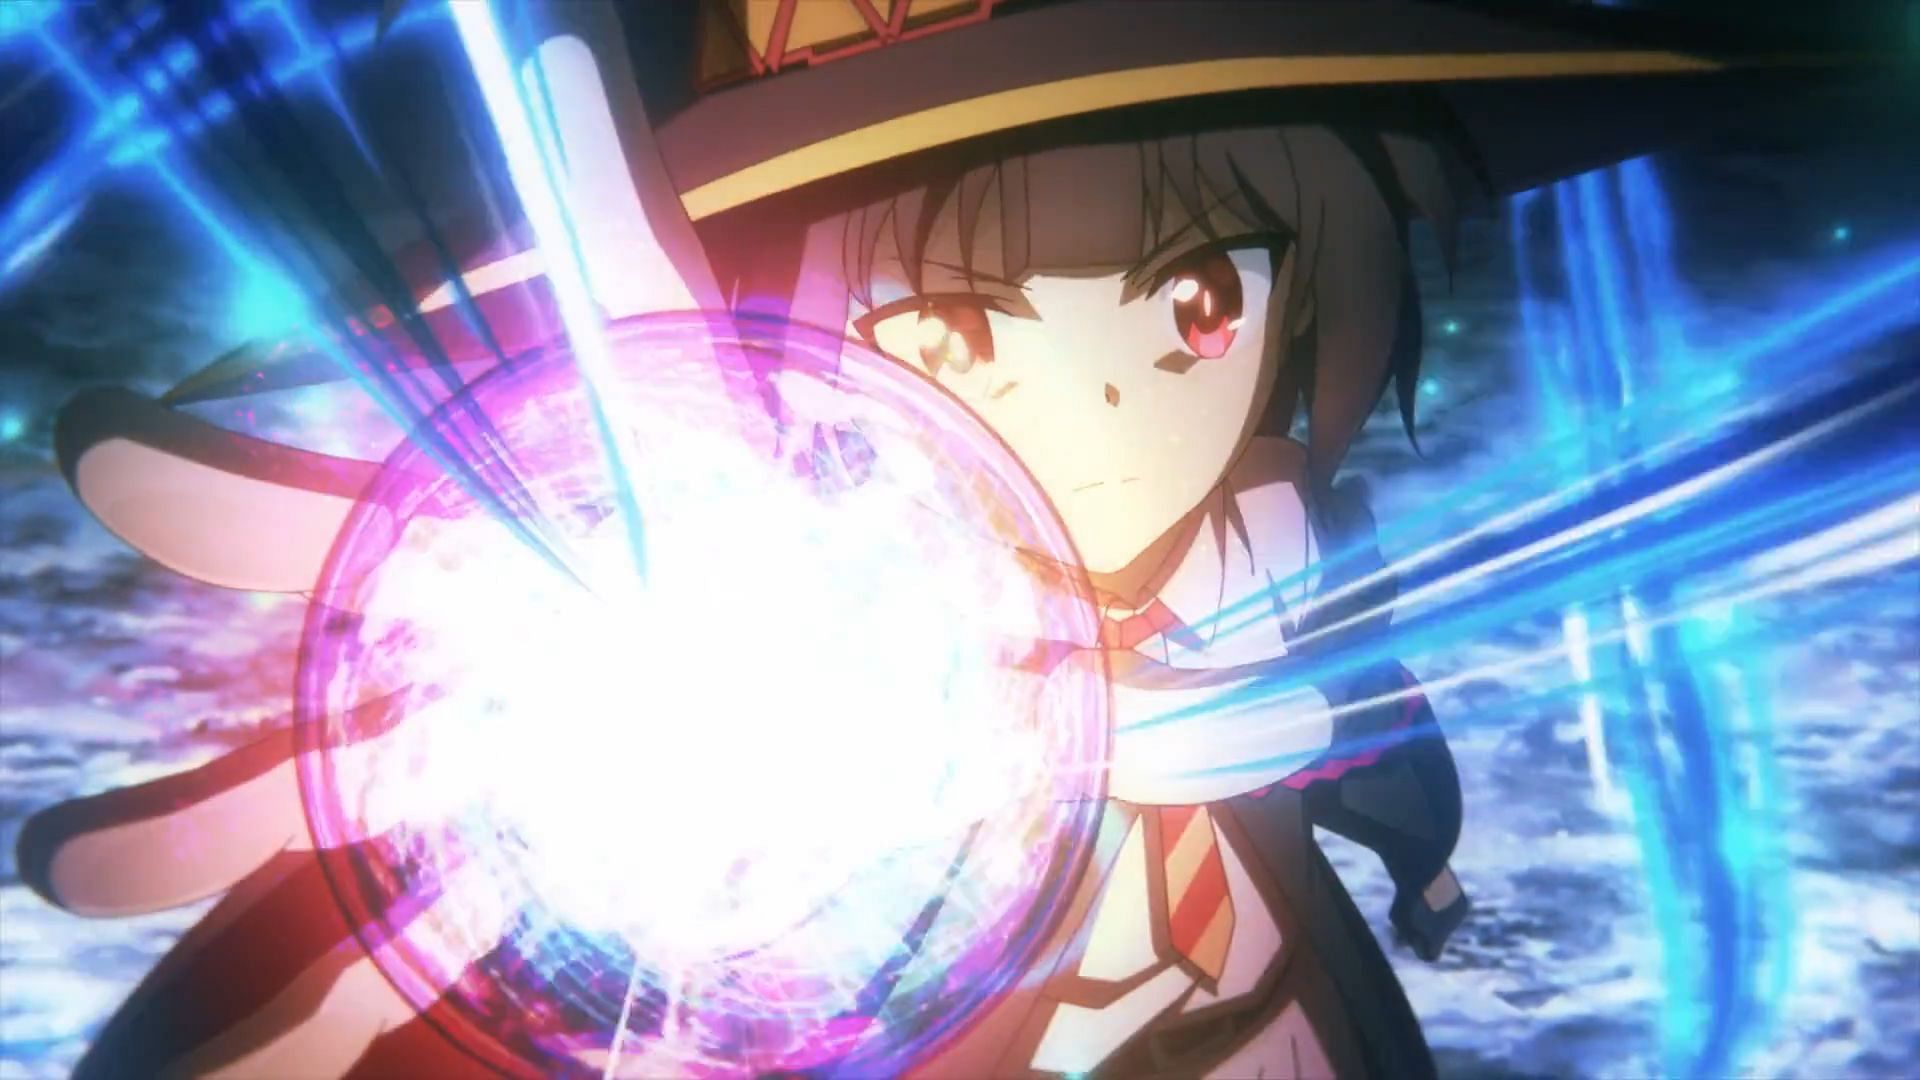 Megumin as seen in KonoSuba: An Explosion on This Wonderful World! episode 5 (Image via Studio Deen)